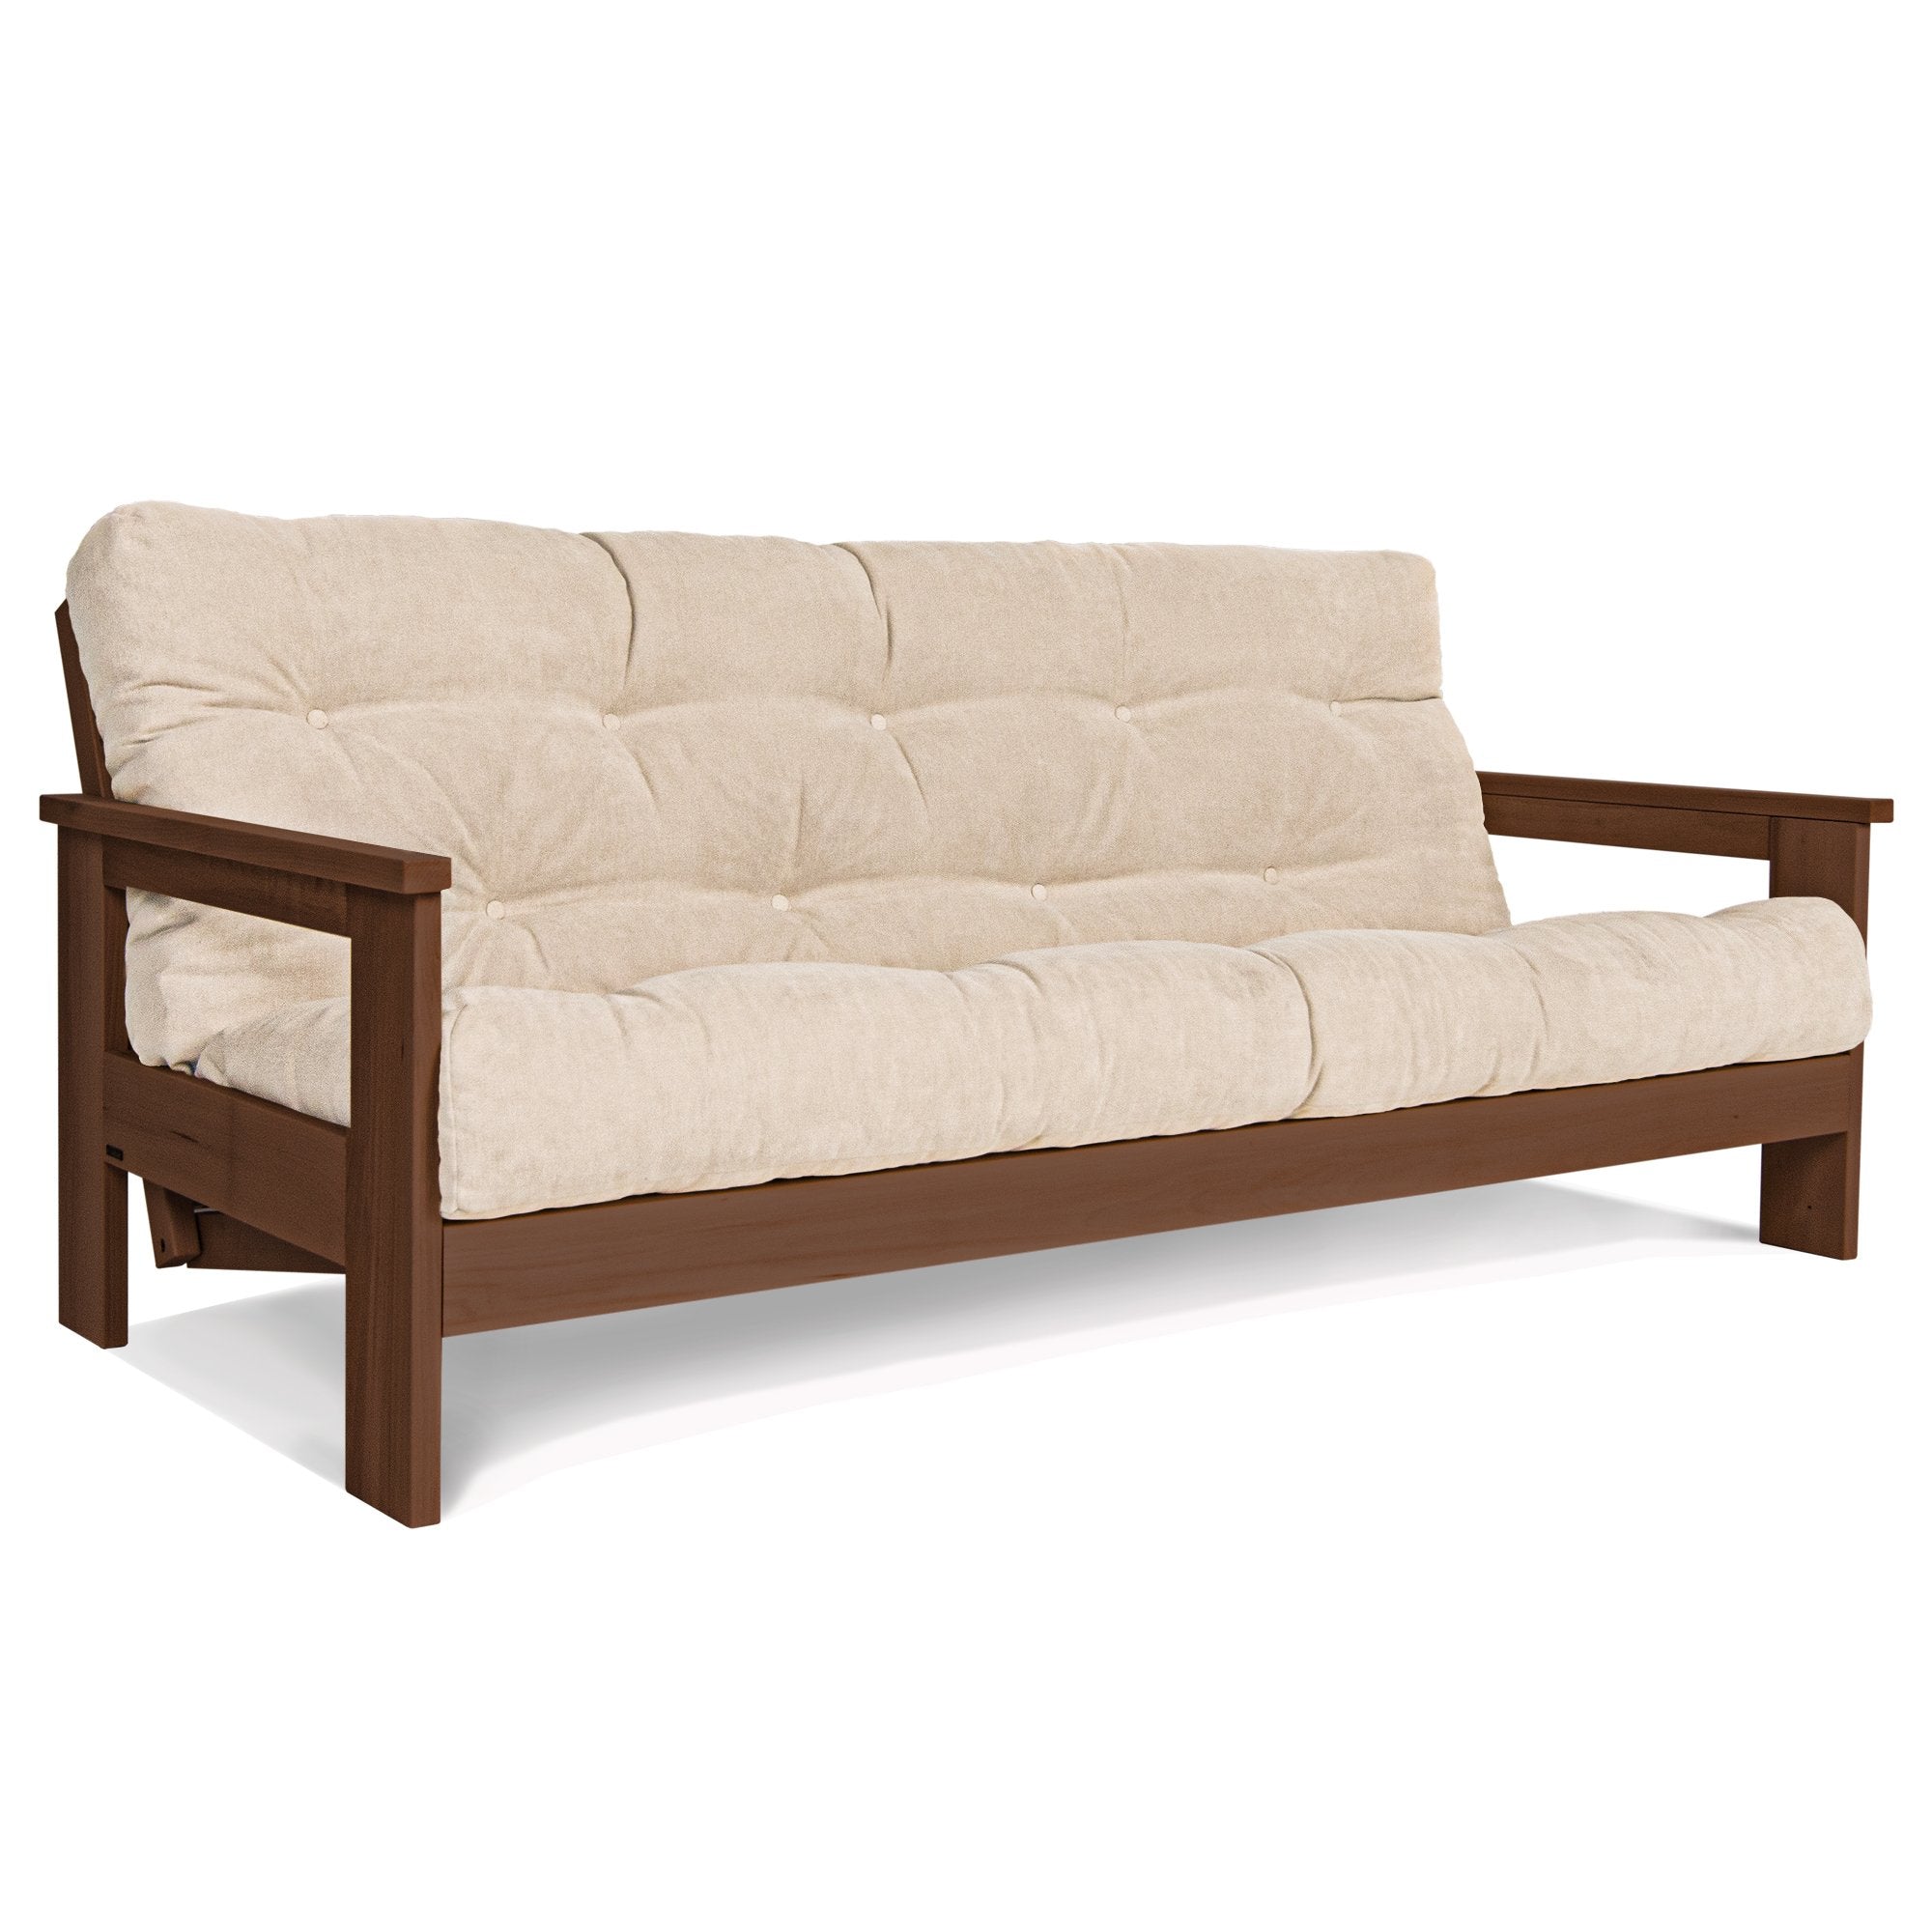 Раскладной диван-футон MEXICO, орехового цвета